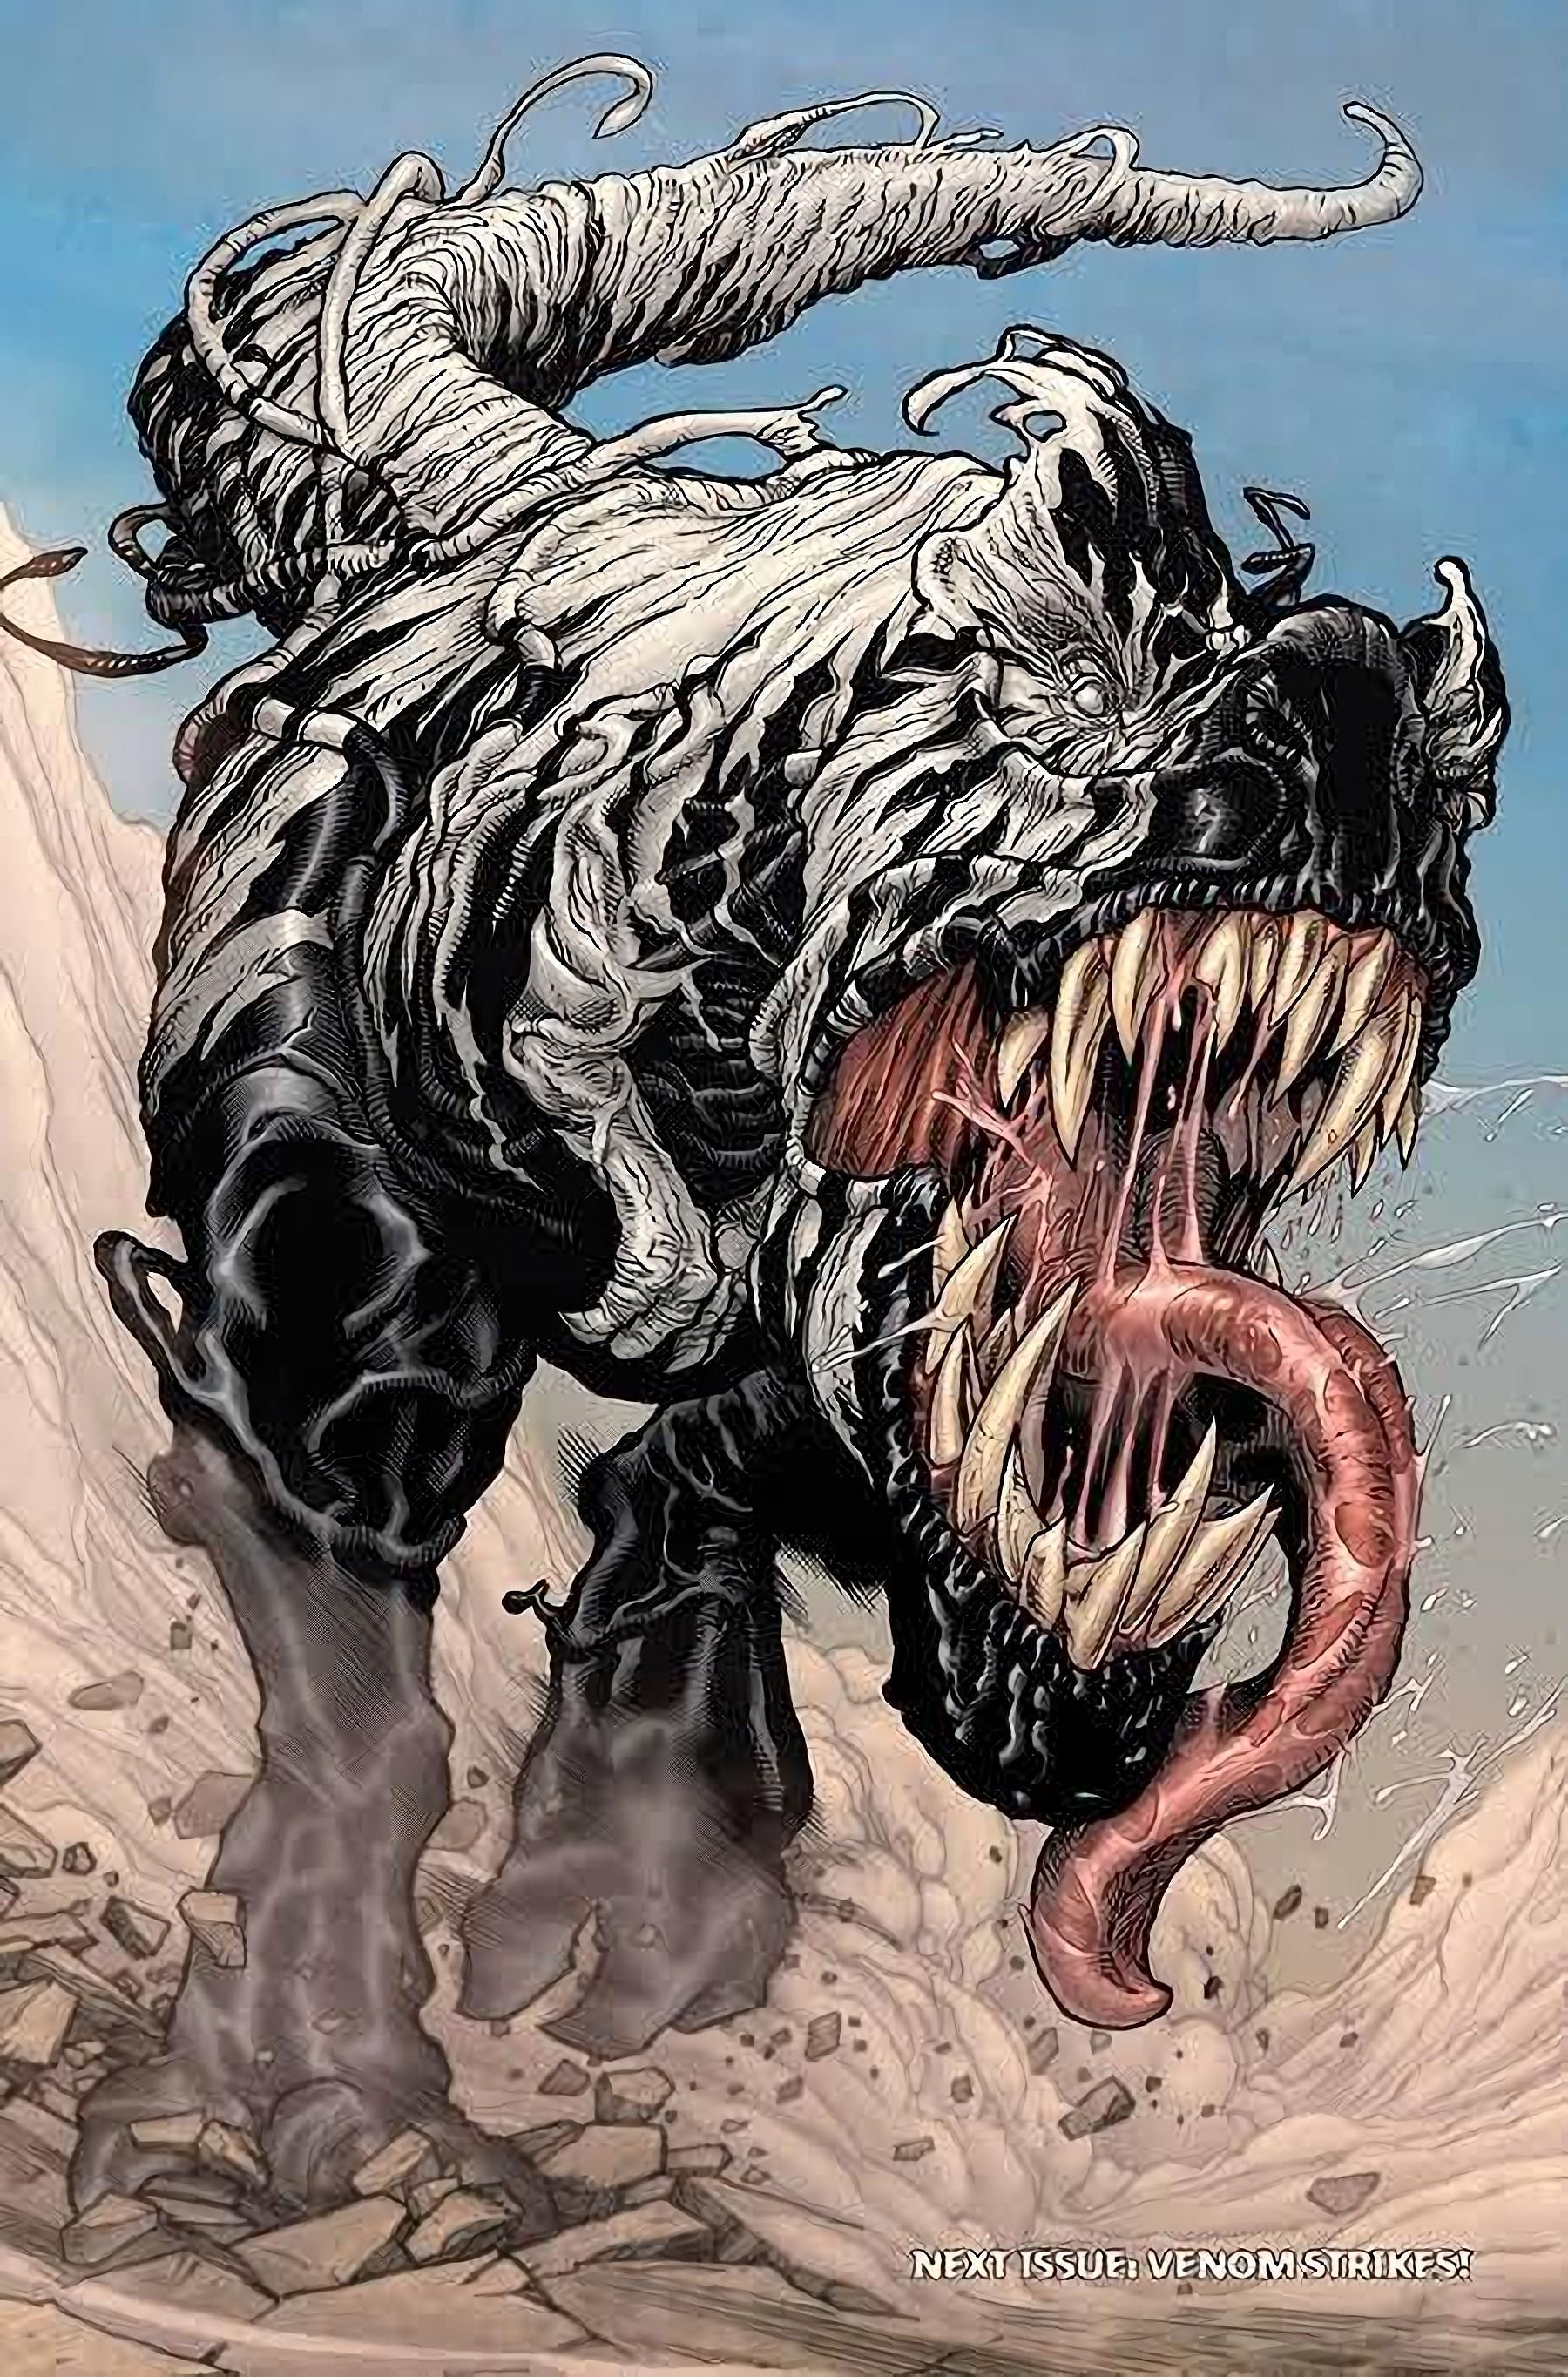 Merging with a Dinosaur (Image via Marvel Comics)